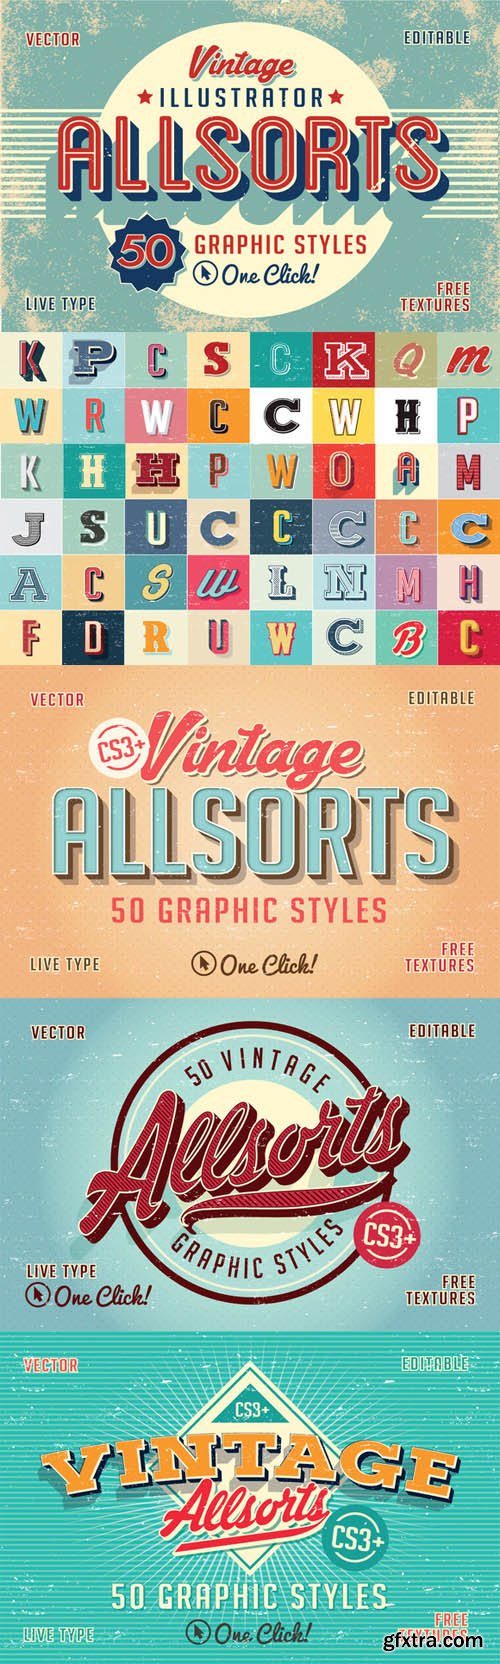 CreativeMarket - Vintage Allsorts Graphic Styles 125783